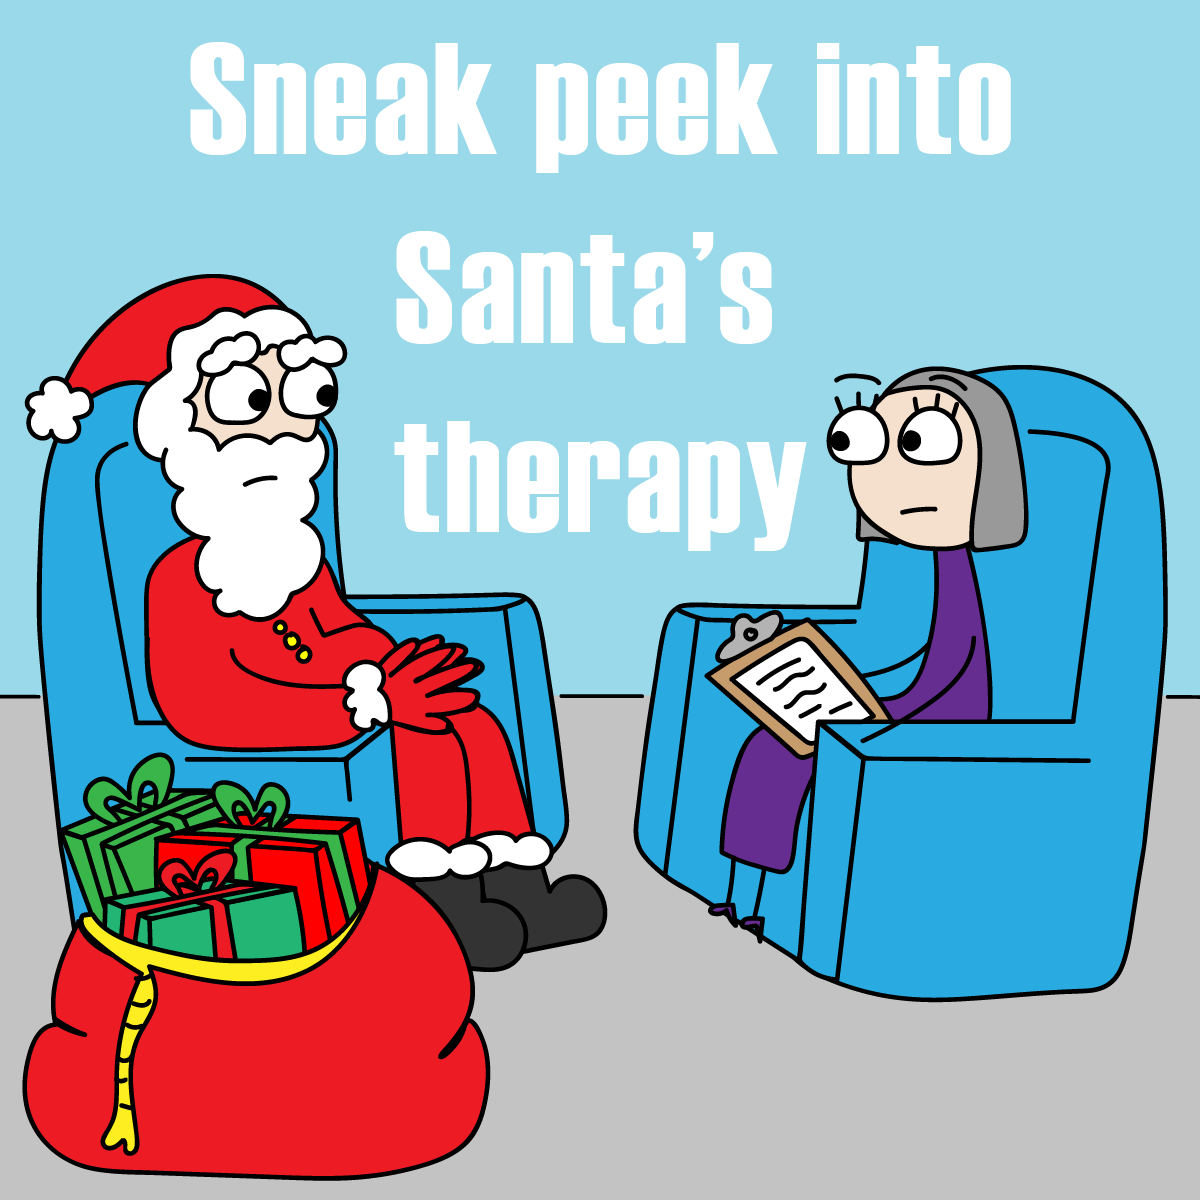 Santa therapy session